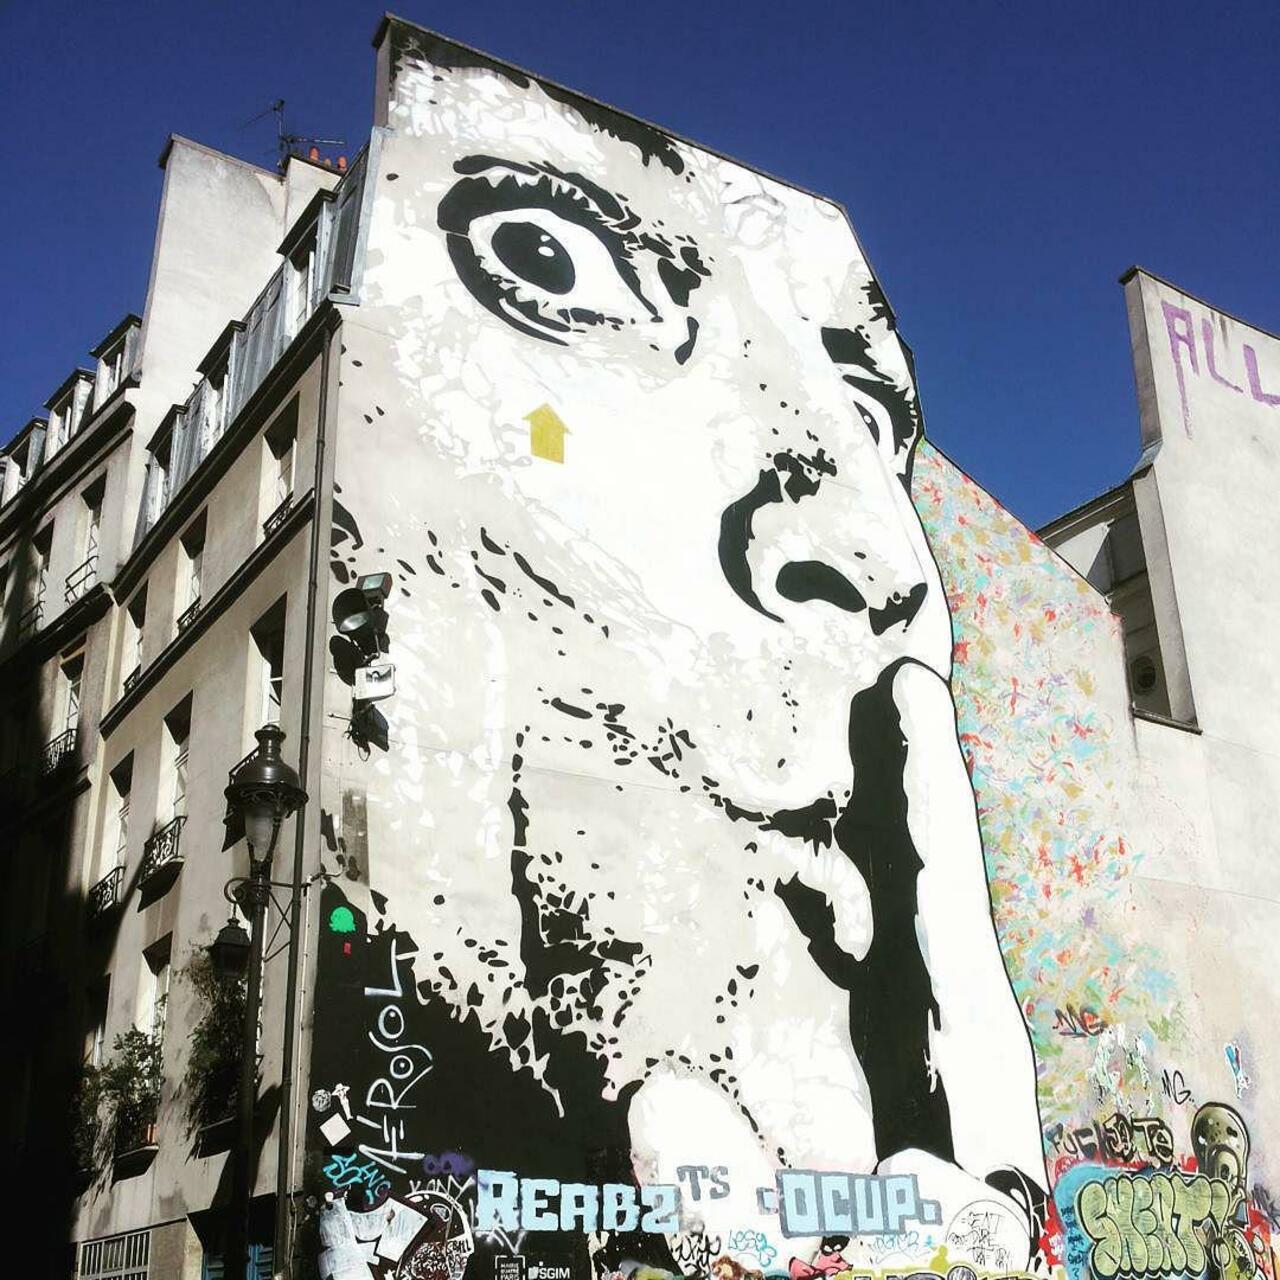 circumjacent_fr: #Paris #graffiti photo by maryfrisy http://ift.tt/1KJWZsA #StreetArt http://t.co/Ey2TAVyJ1Y